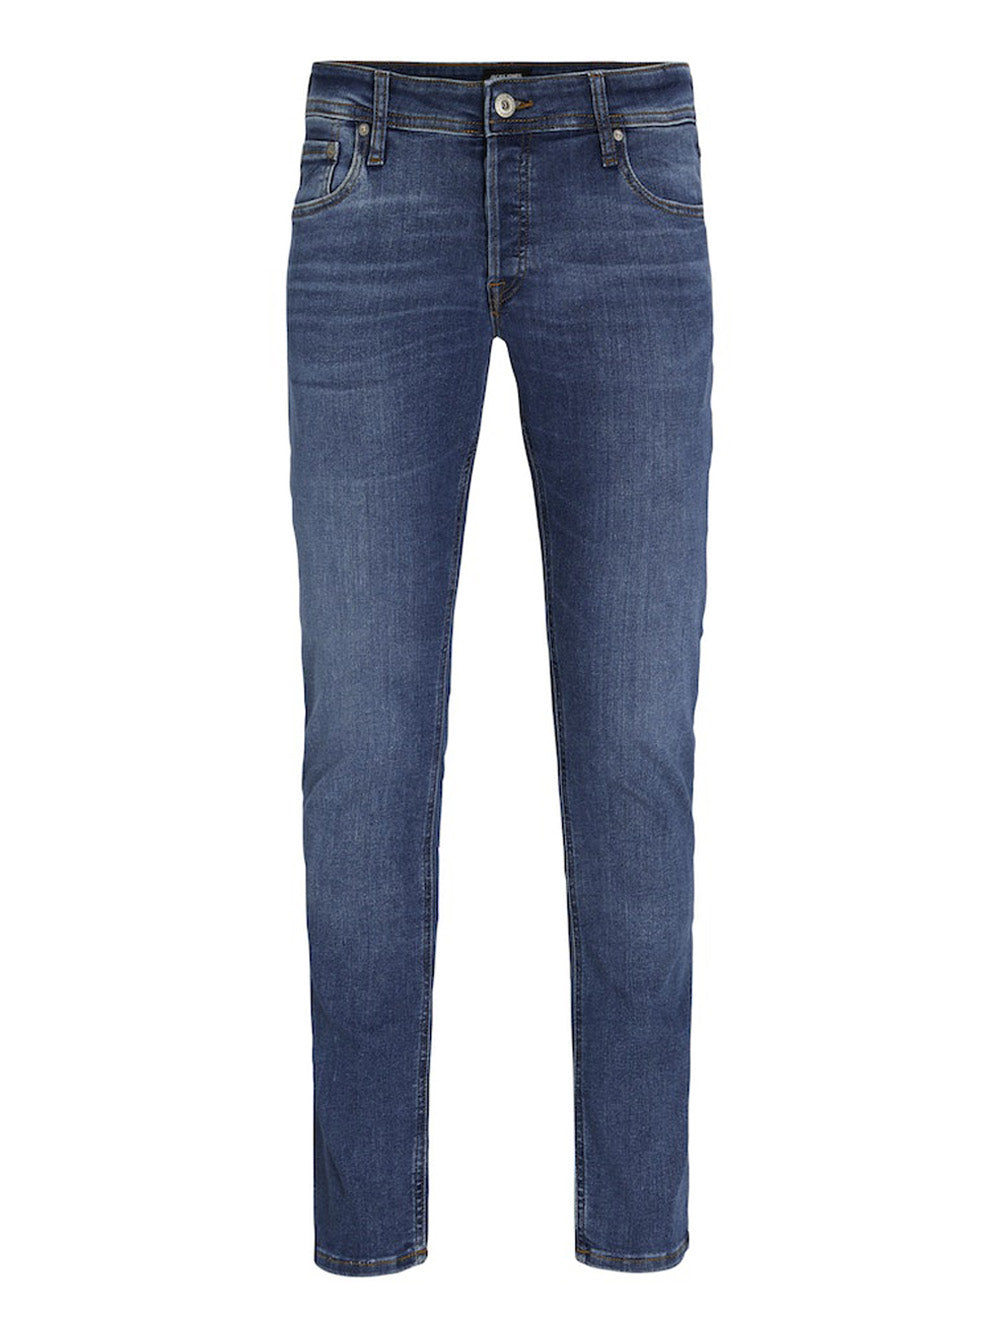 JACK&JONES Jeans Uomo - Blu modello 12152347